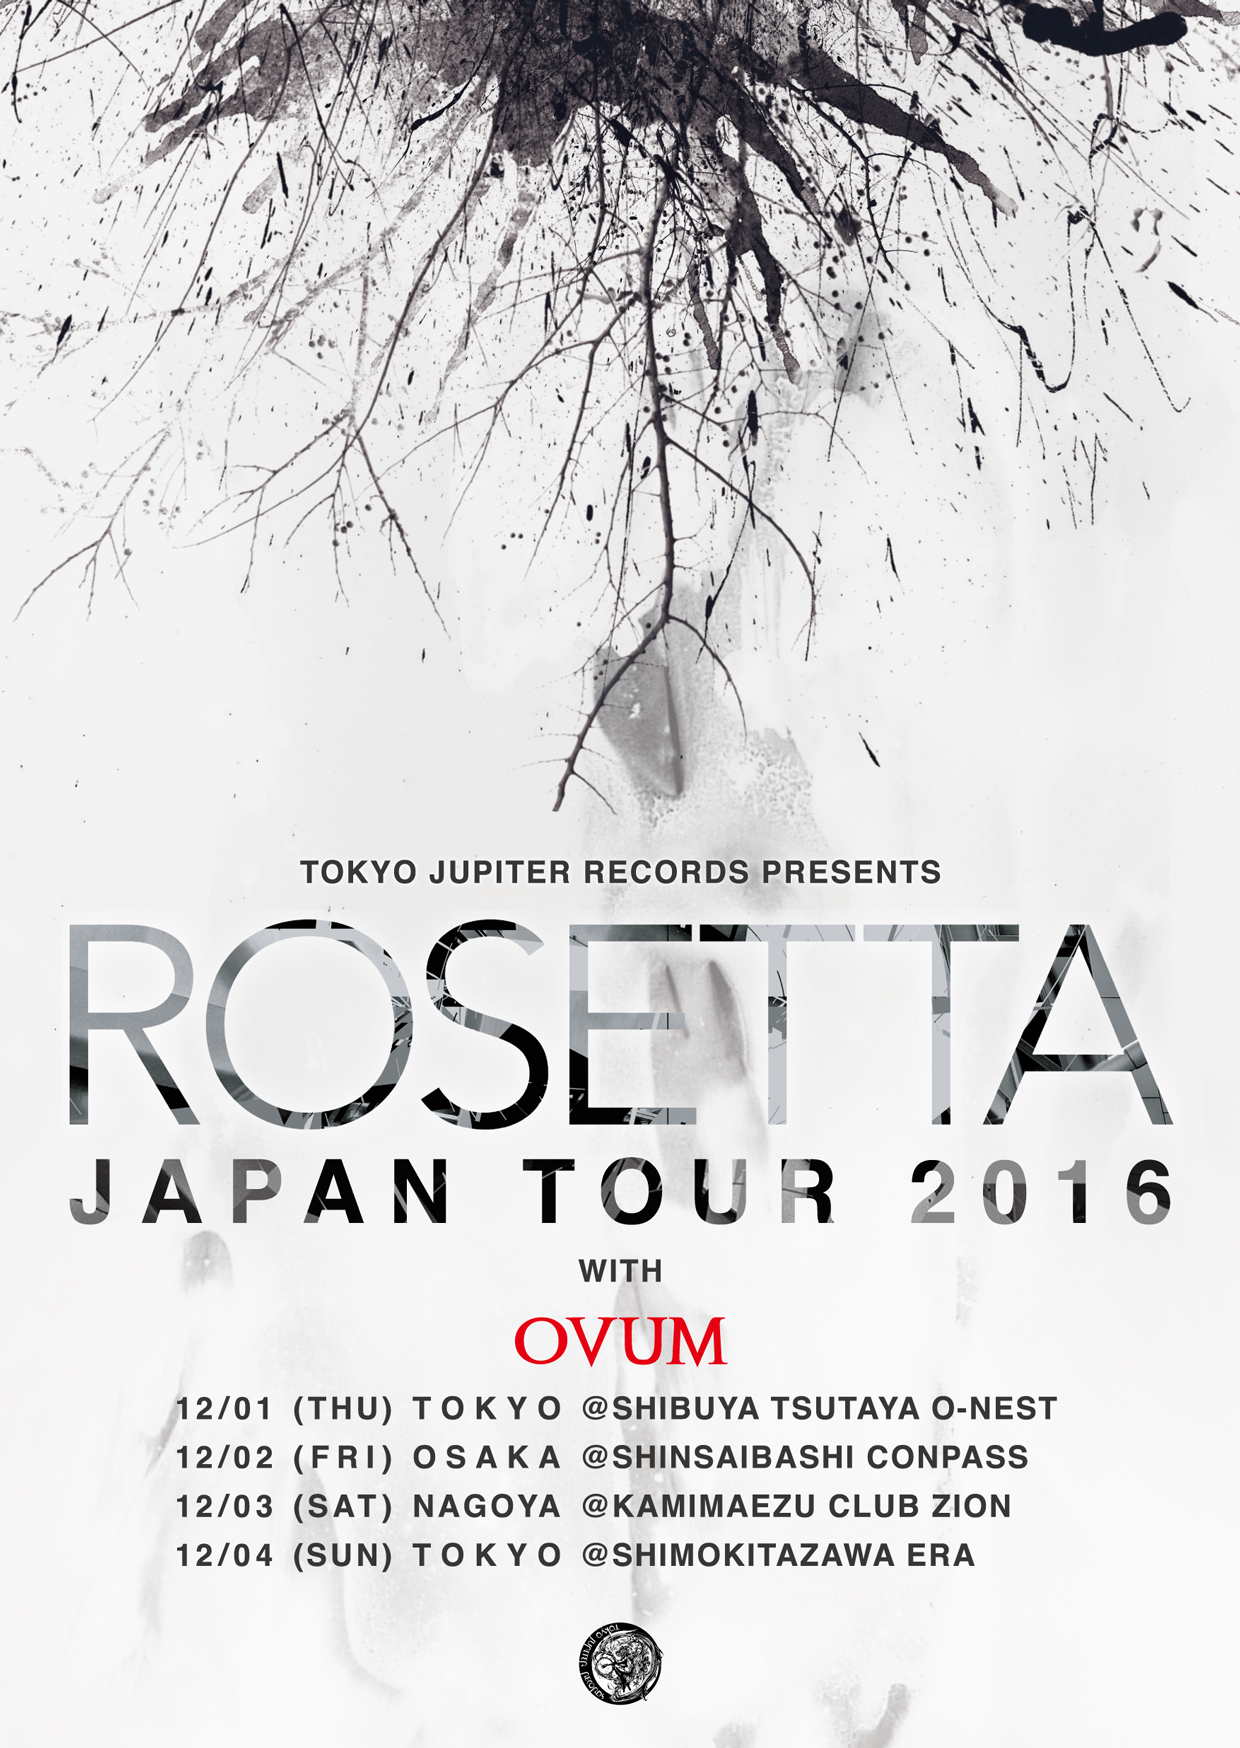 Rosetta Japan tour 2016